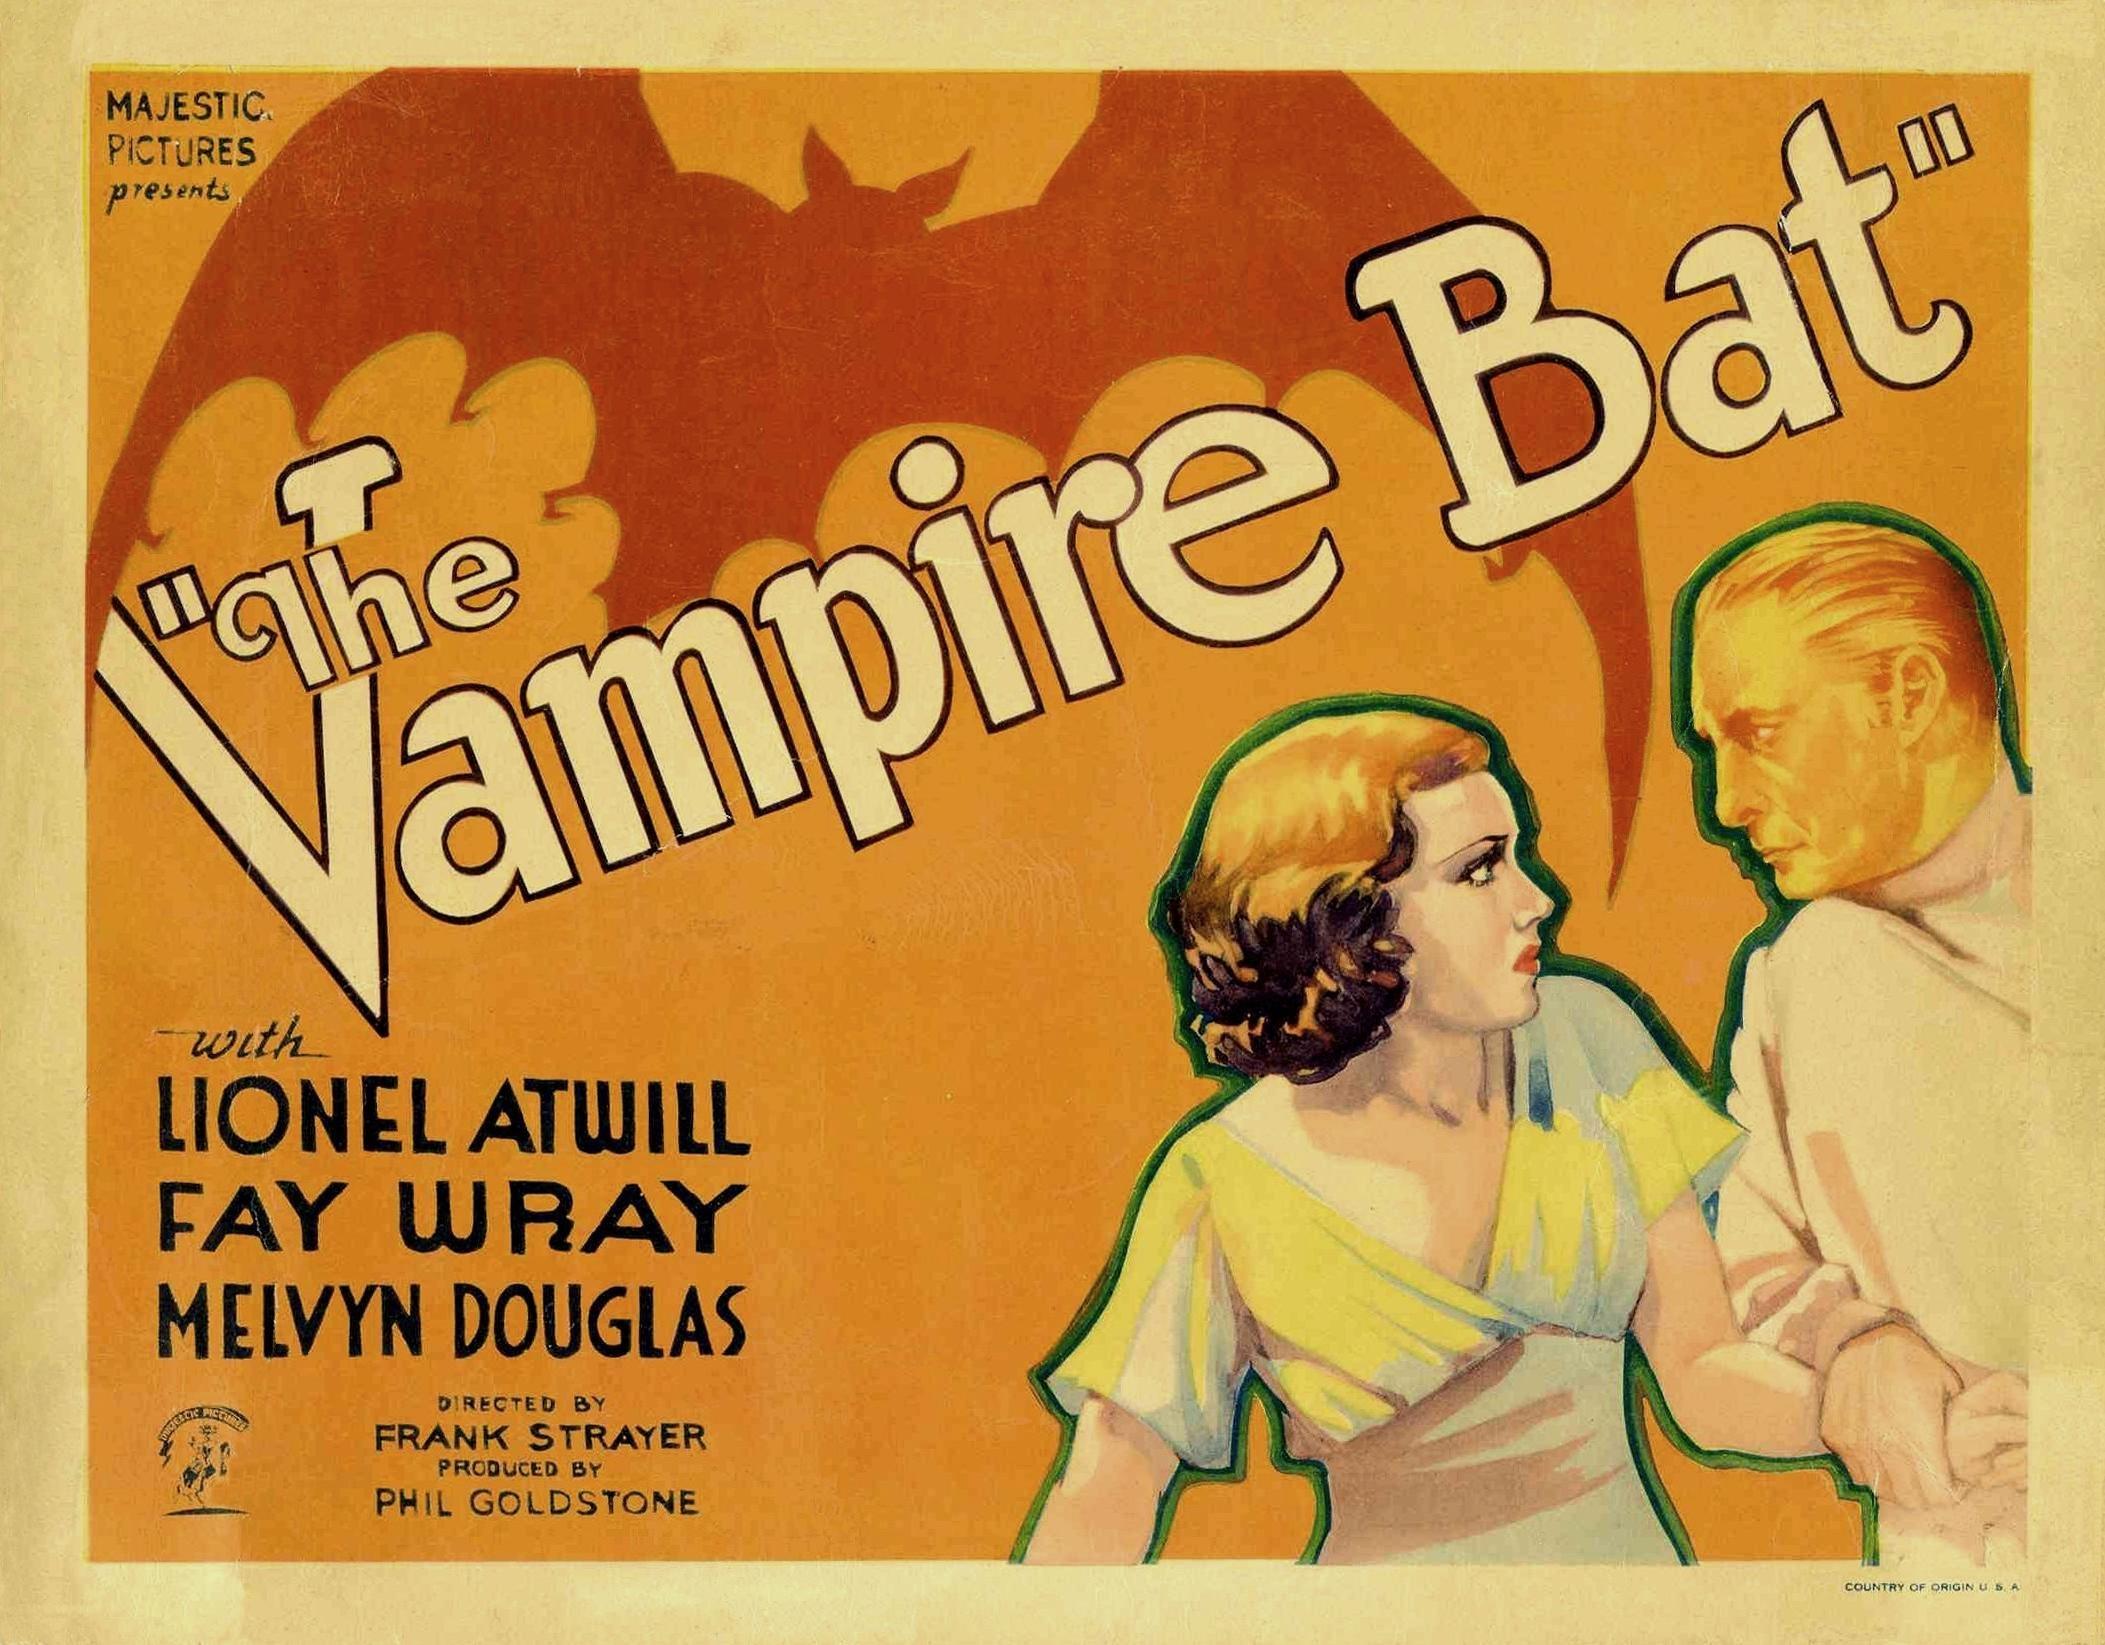 Постер фильма Вампир - летучая мышь | Vampire Bat